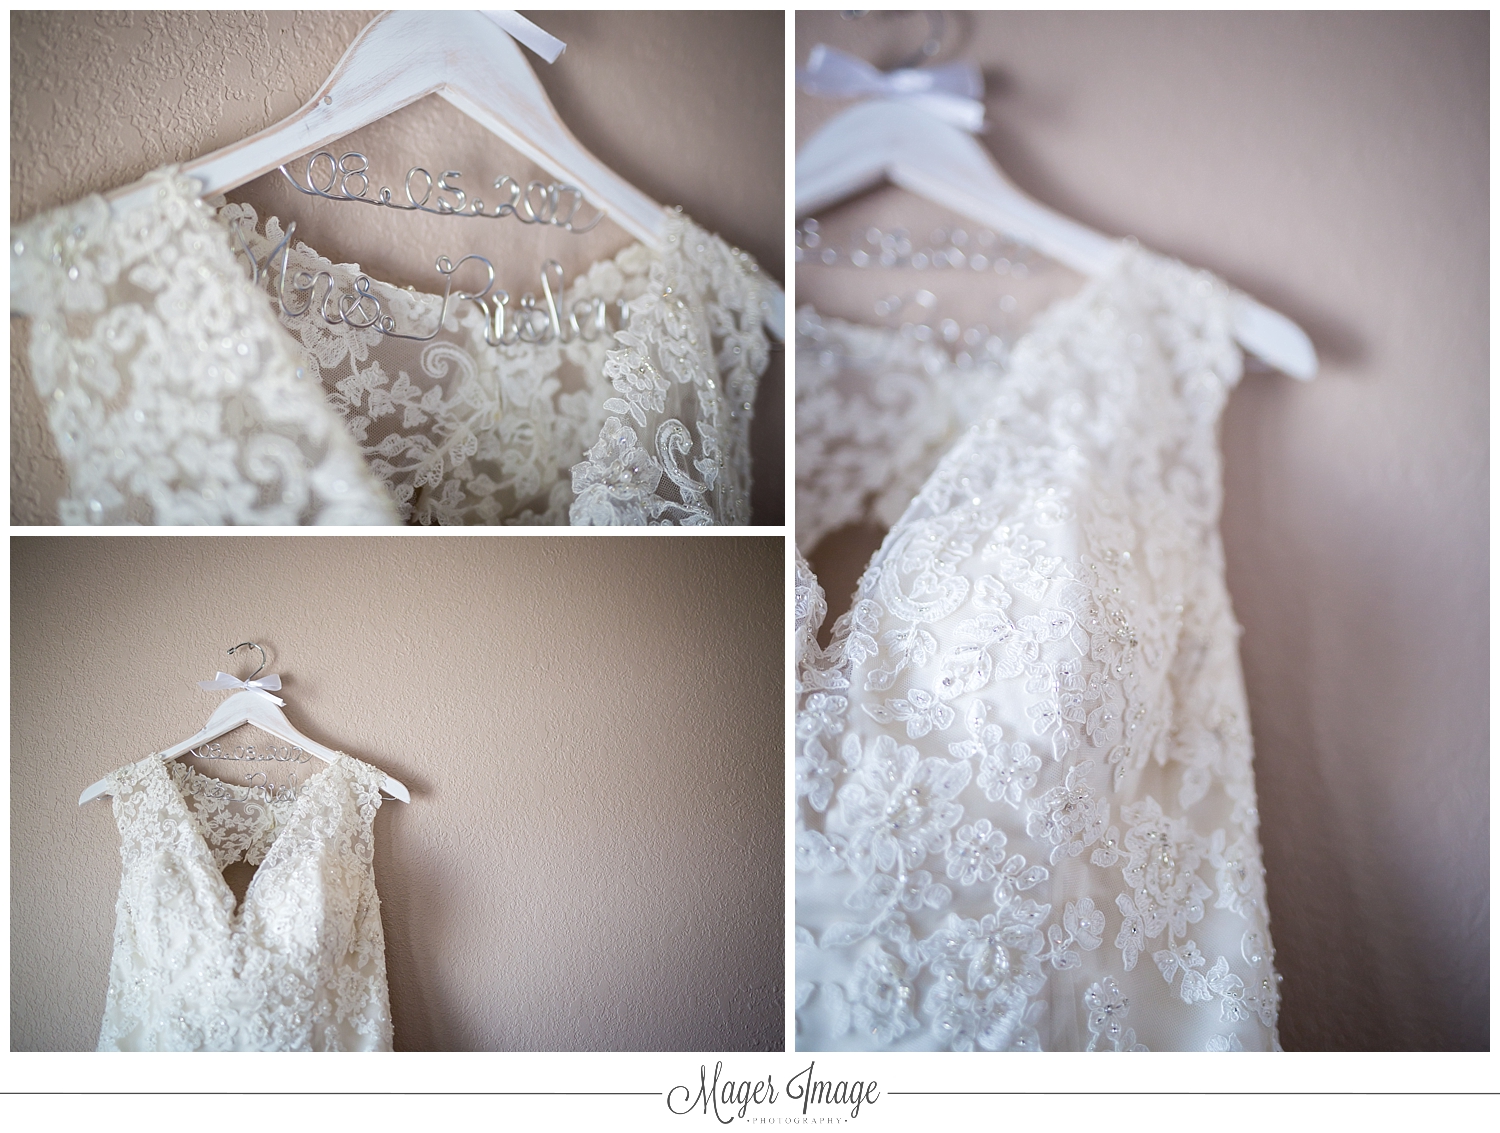 wedding dress white lace